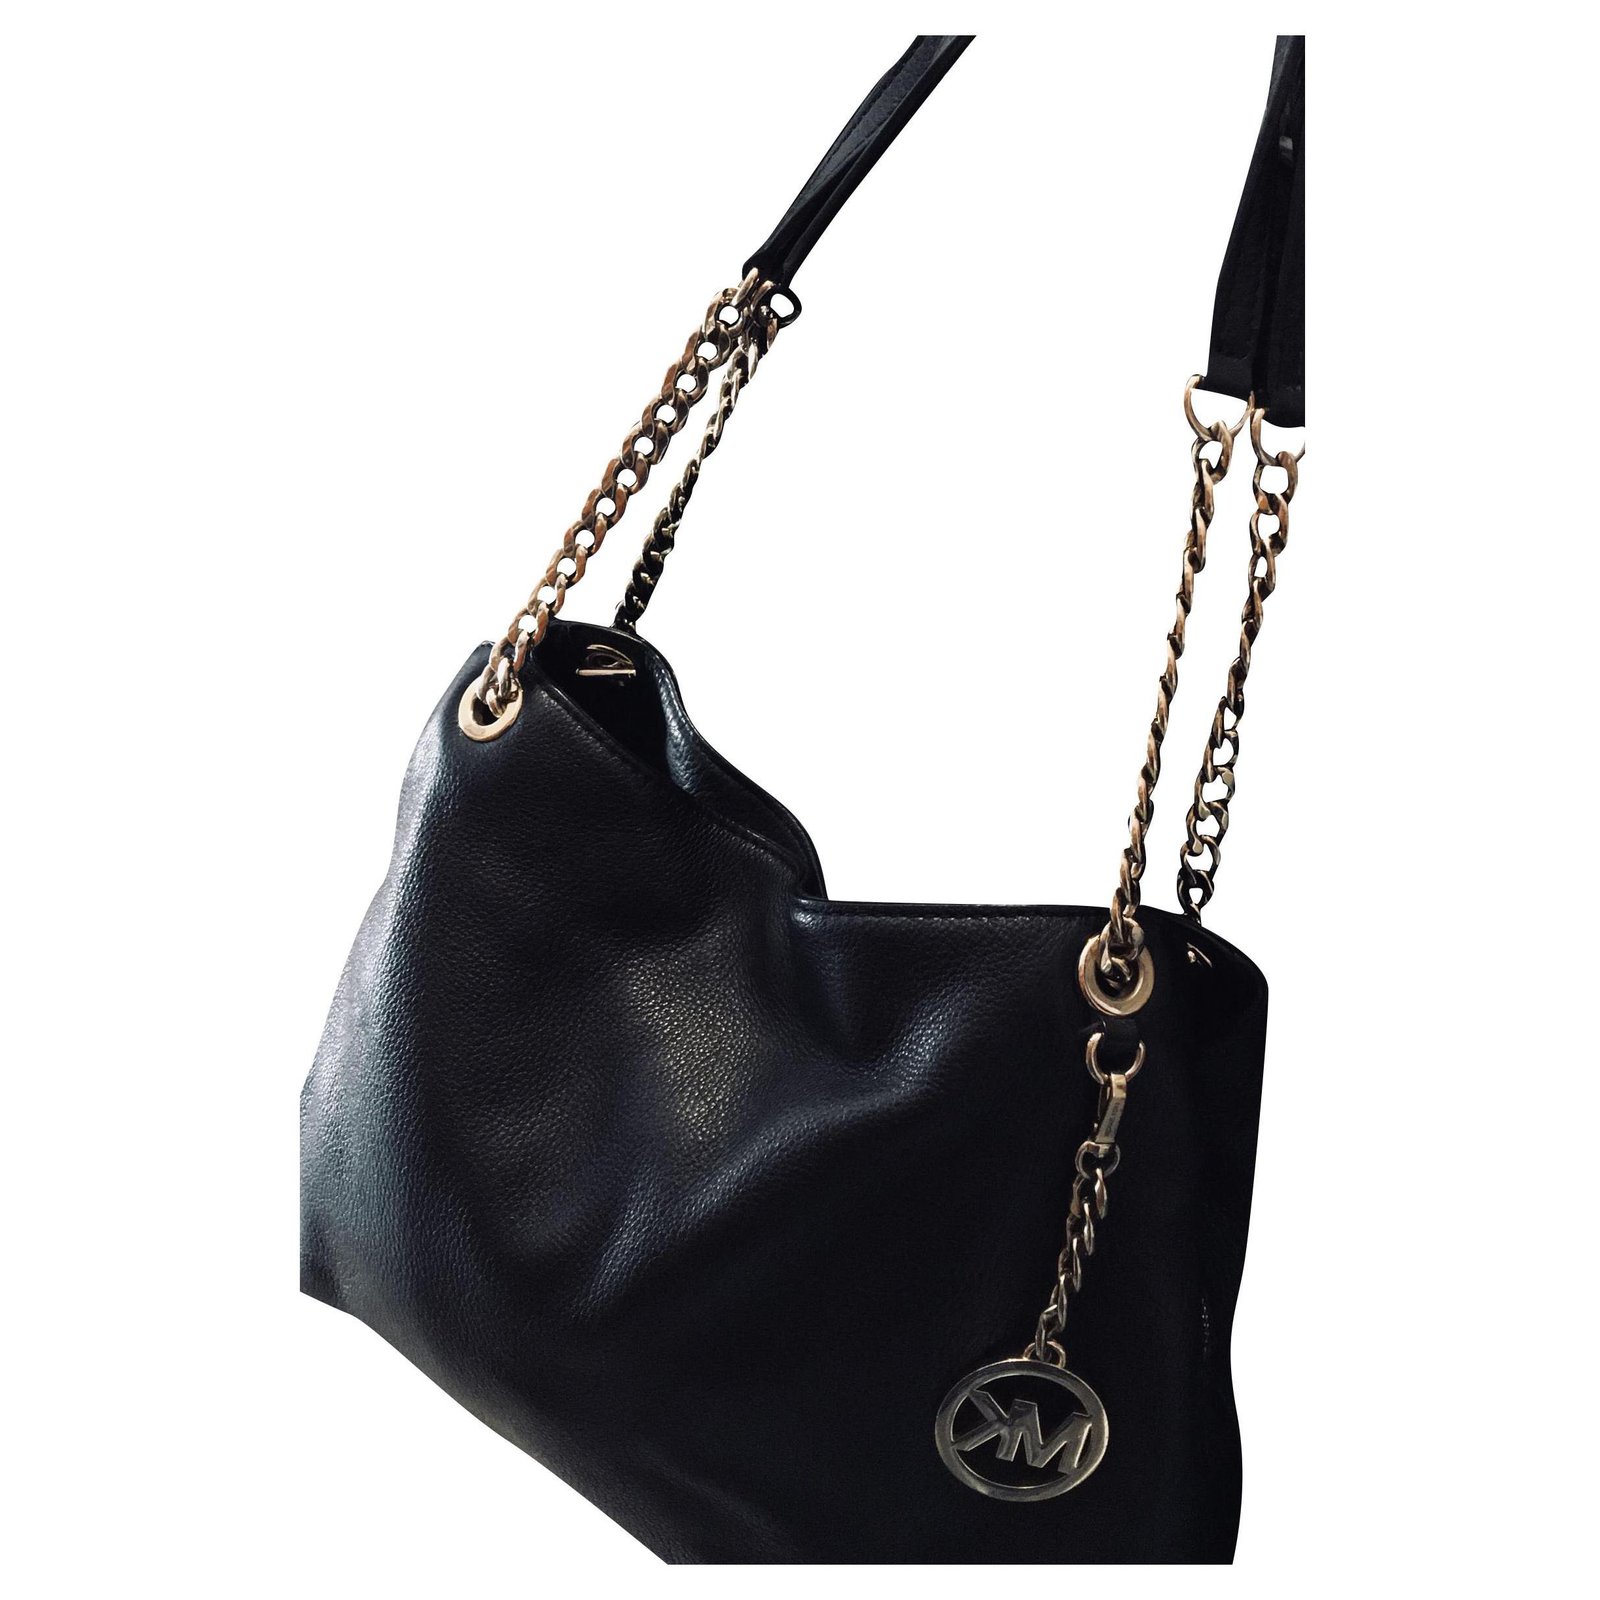 michael kors black leather handbag